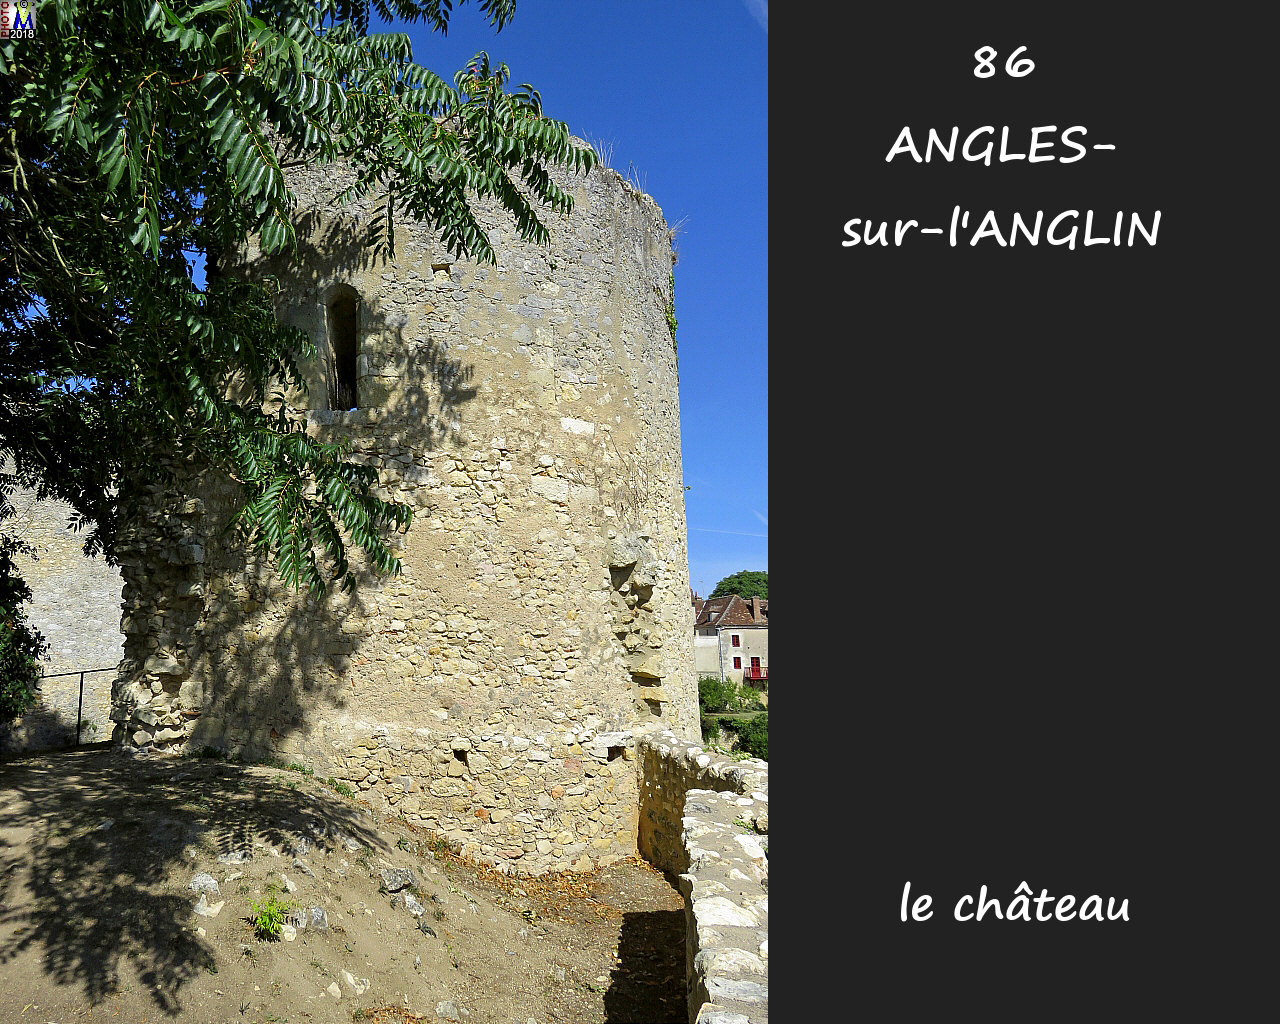 86ANGLES-S-ANGLIN_chateau_1142.jpg